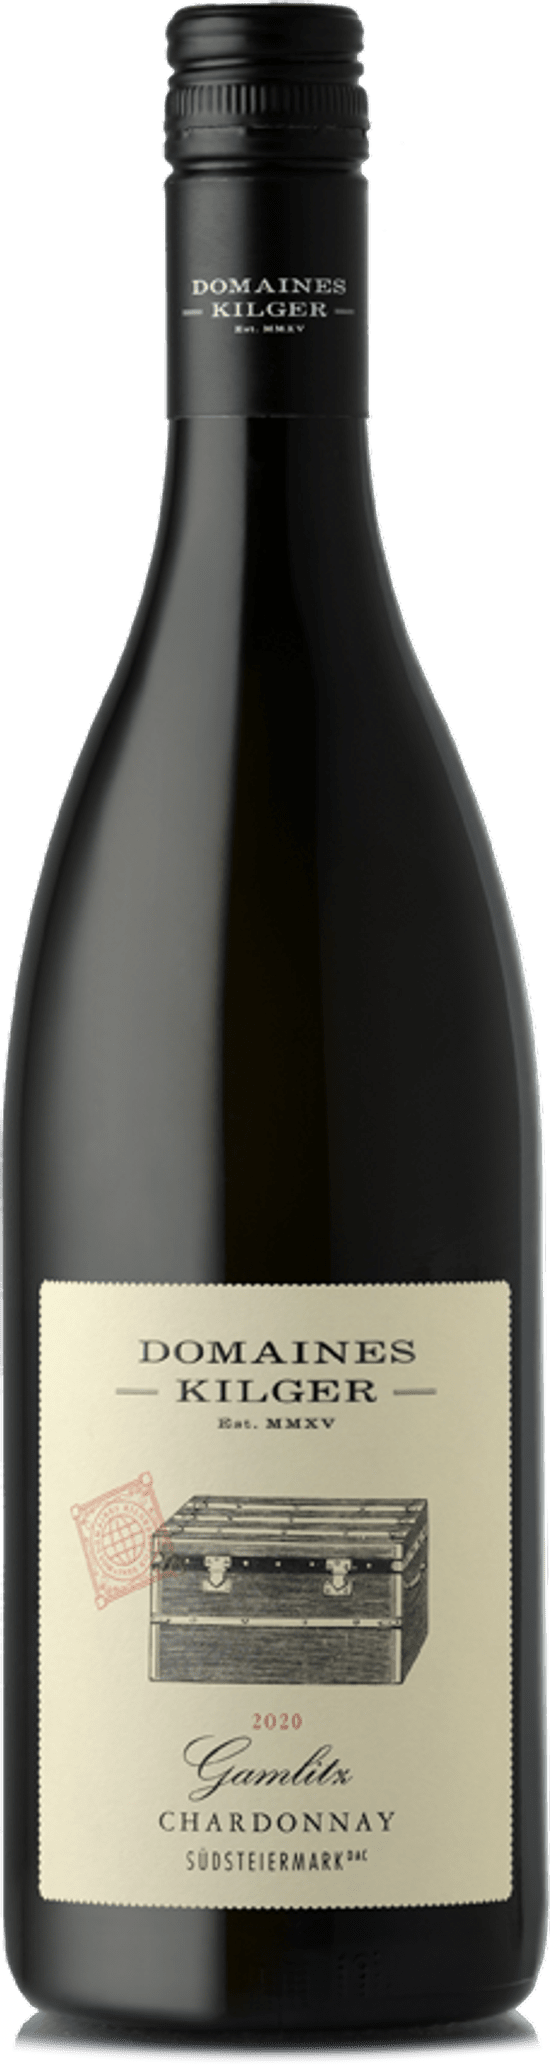 2020 Chardonnay GAMLITZ DAC